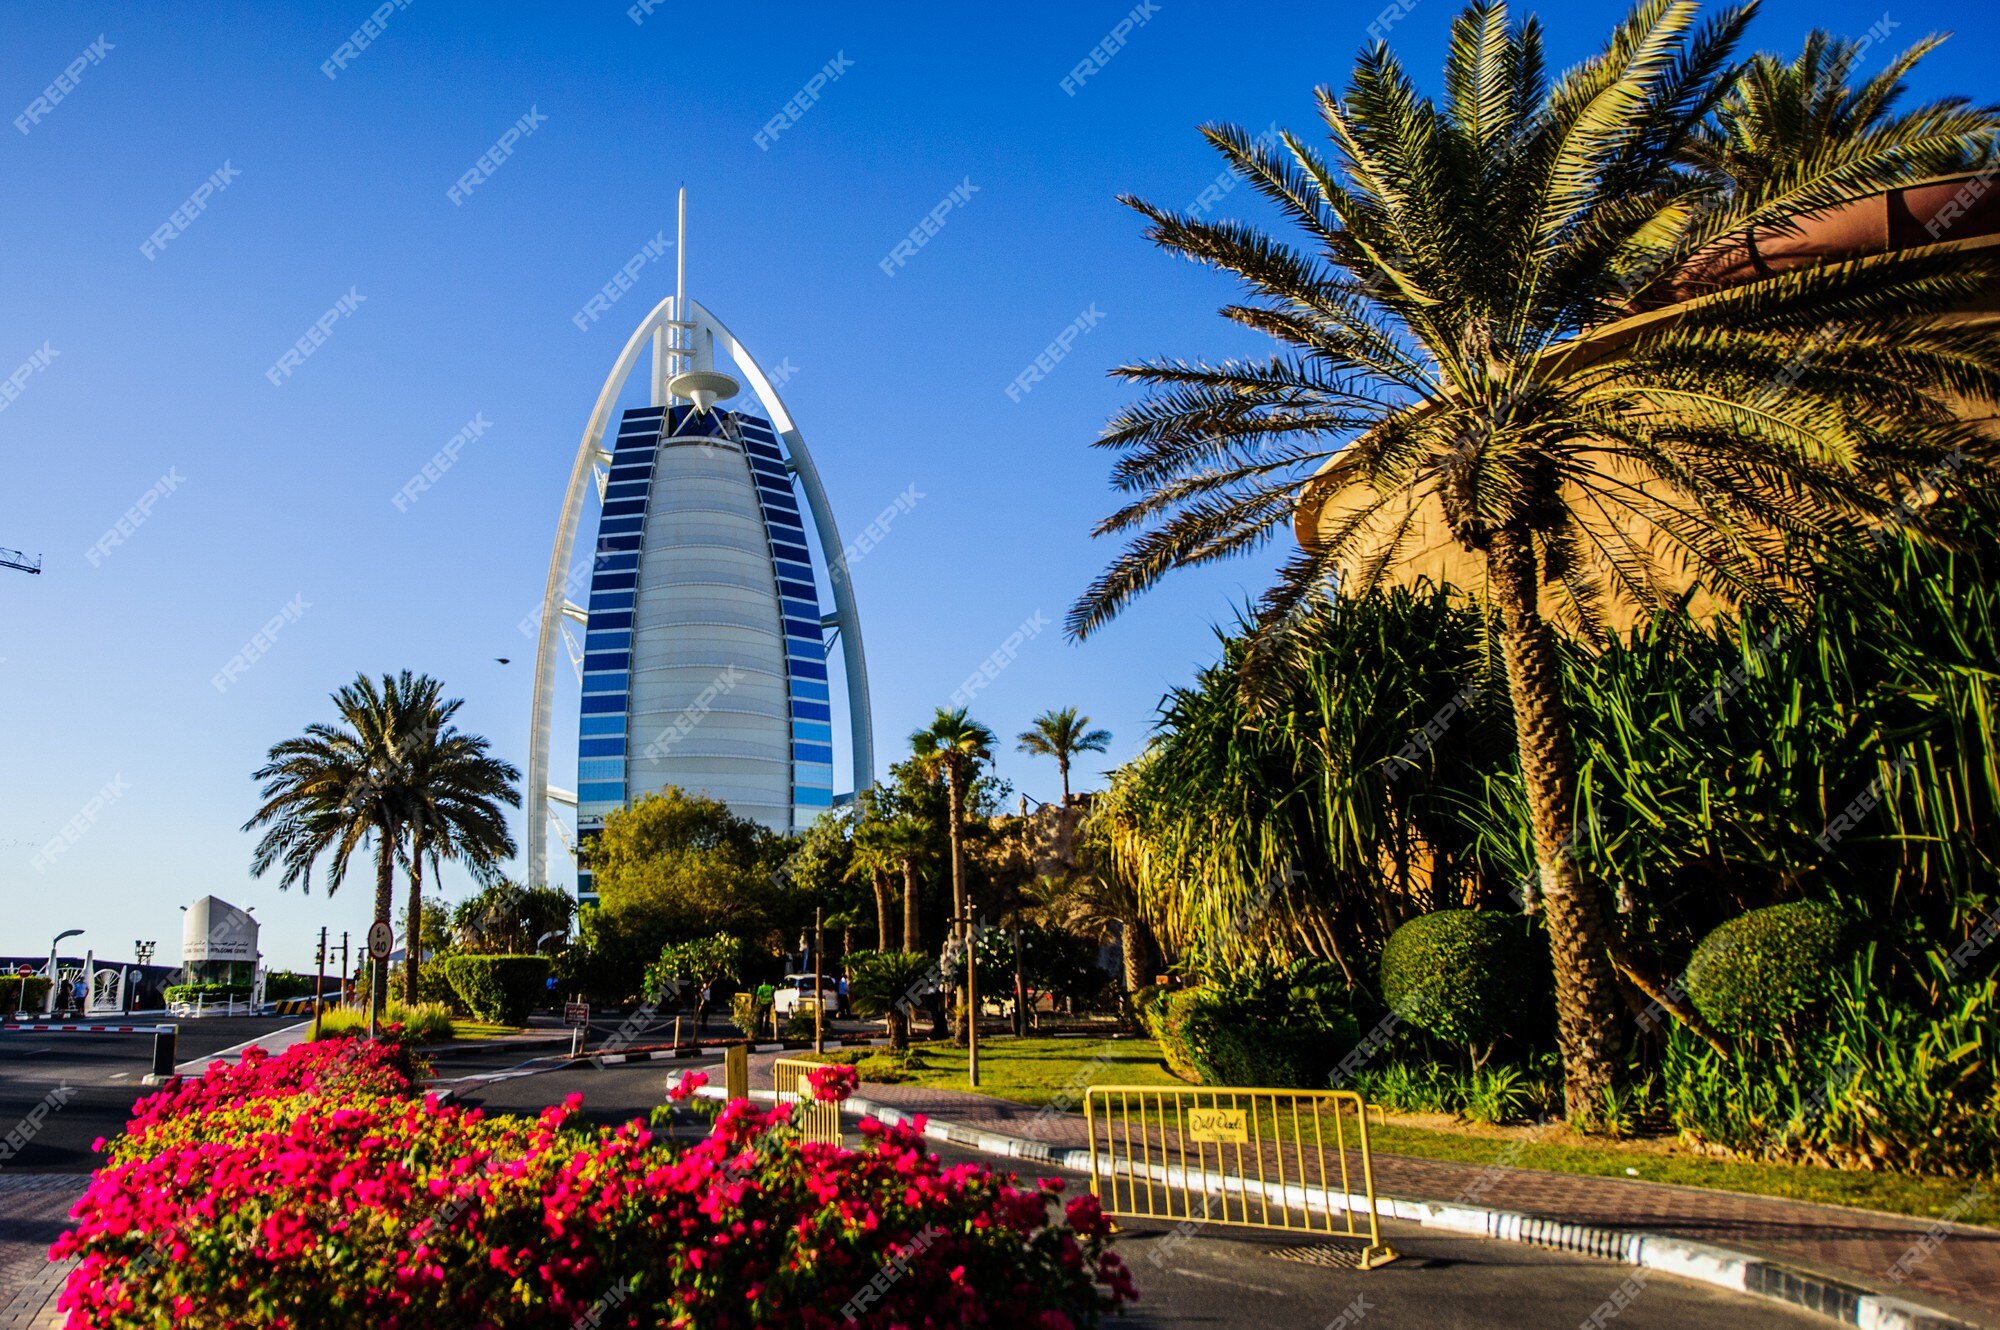 Premium Photo | Dubai, uae - 10 october 2017: view for burj al arab hotel  from the madinat jumeirah in dubai, uae. burj al arab with 321 meters high  is the most